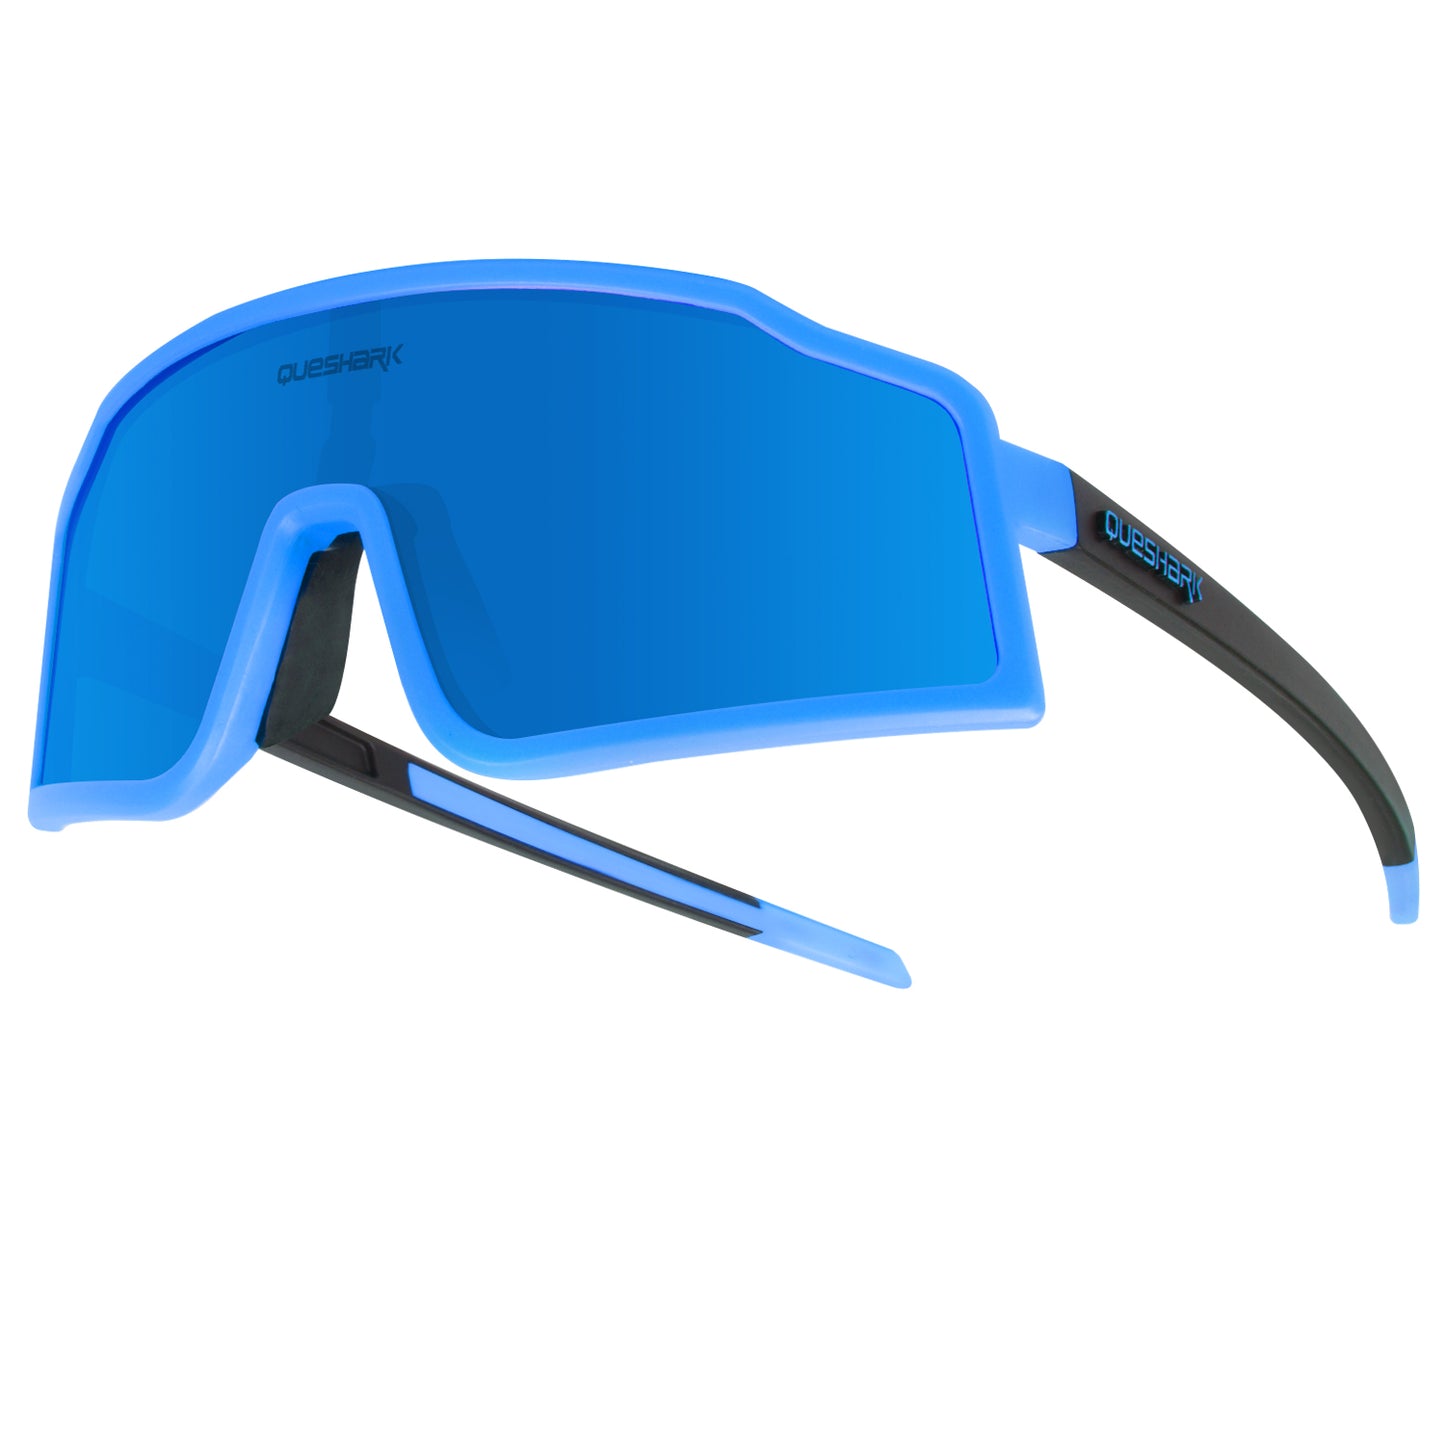 <transcy>QE54 Gafas deportivas azules Gafas de sol polarizadas para bicicleta Gafas de ciclismo 3 lentes / juego</transcy>